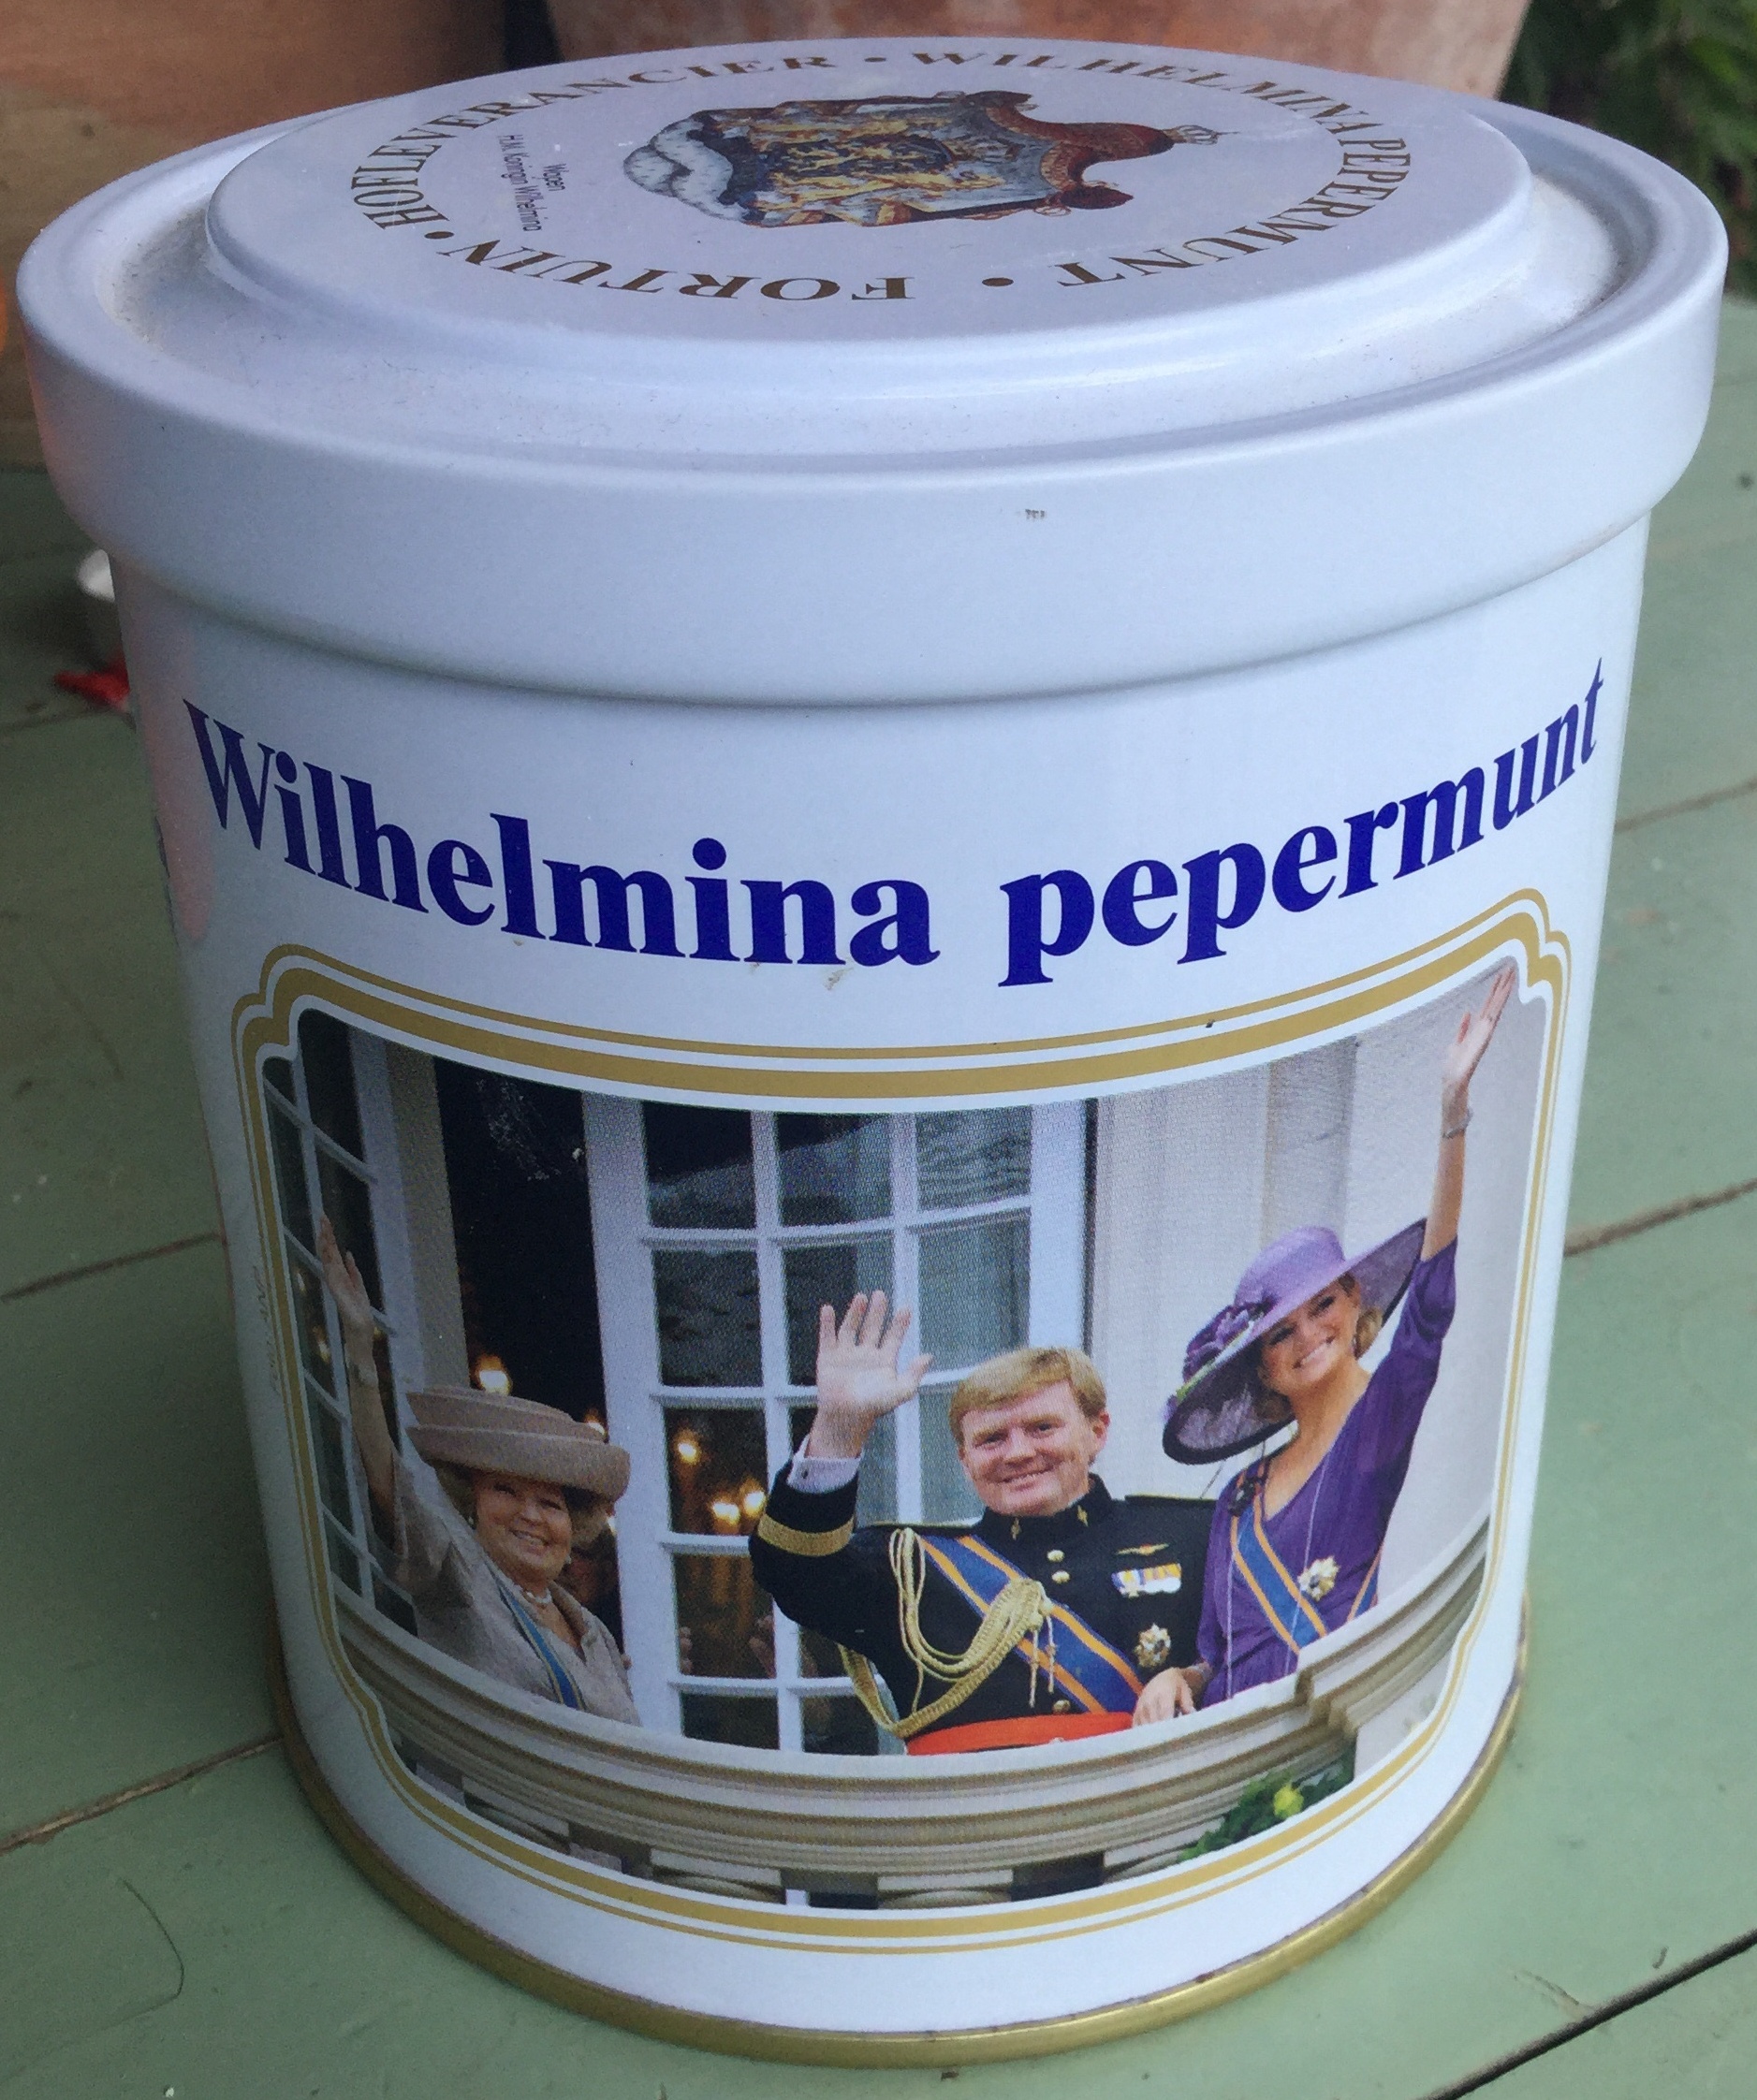 Wilhelmina pepermunt - Product